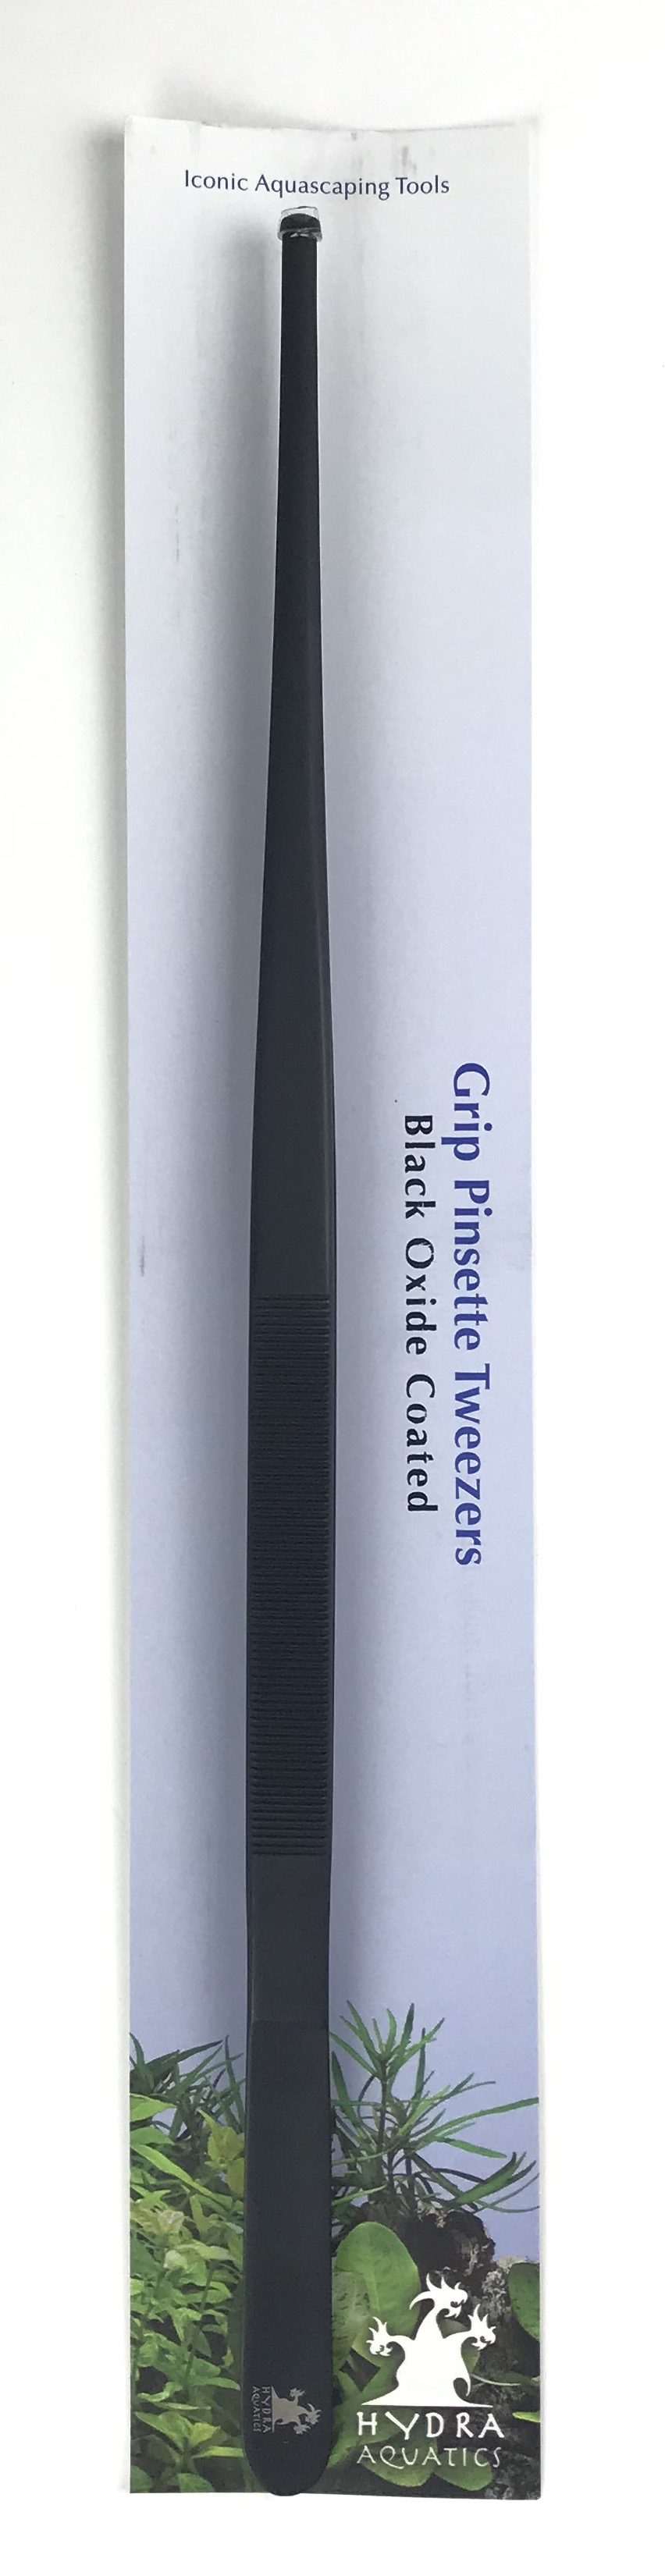 Grip Pinsette Tweezers - Black Oxide - 15.75